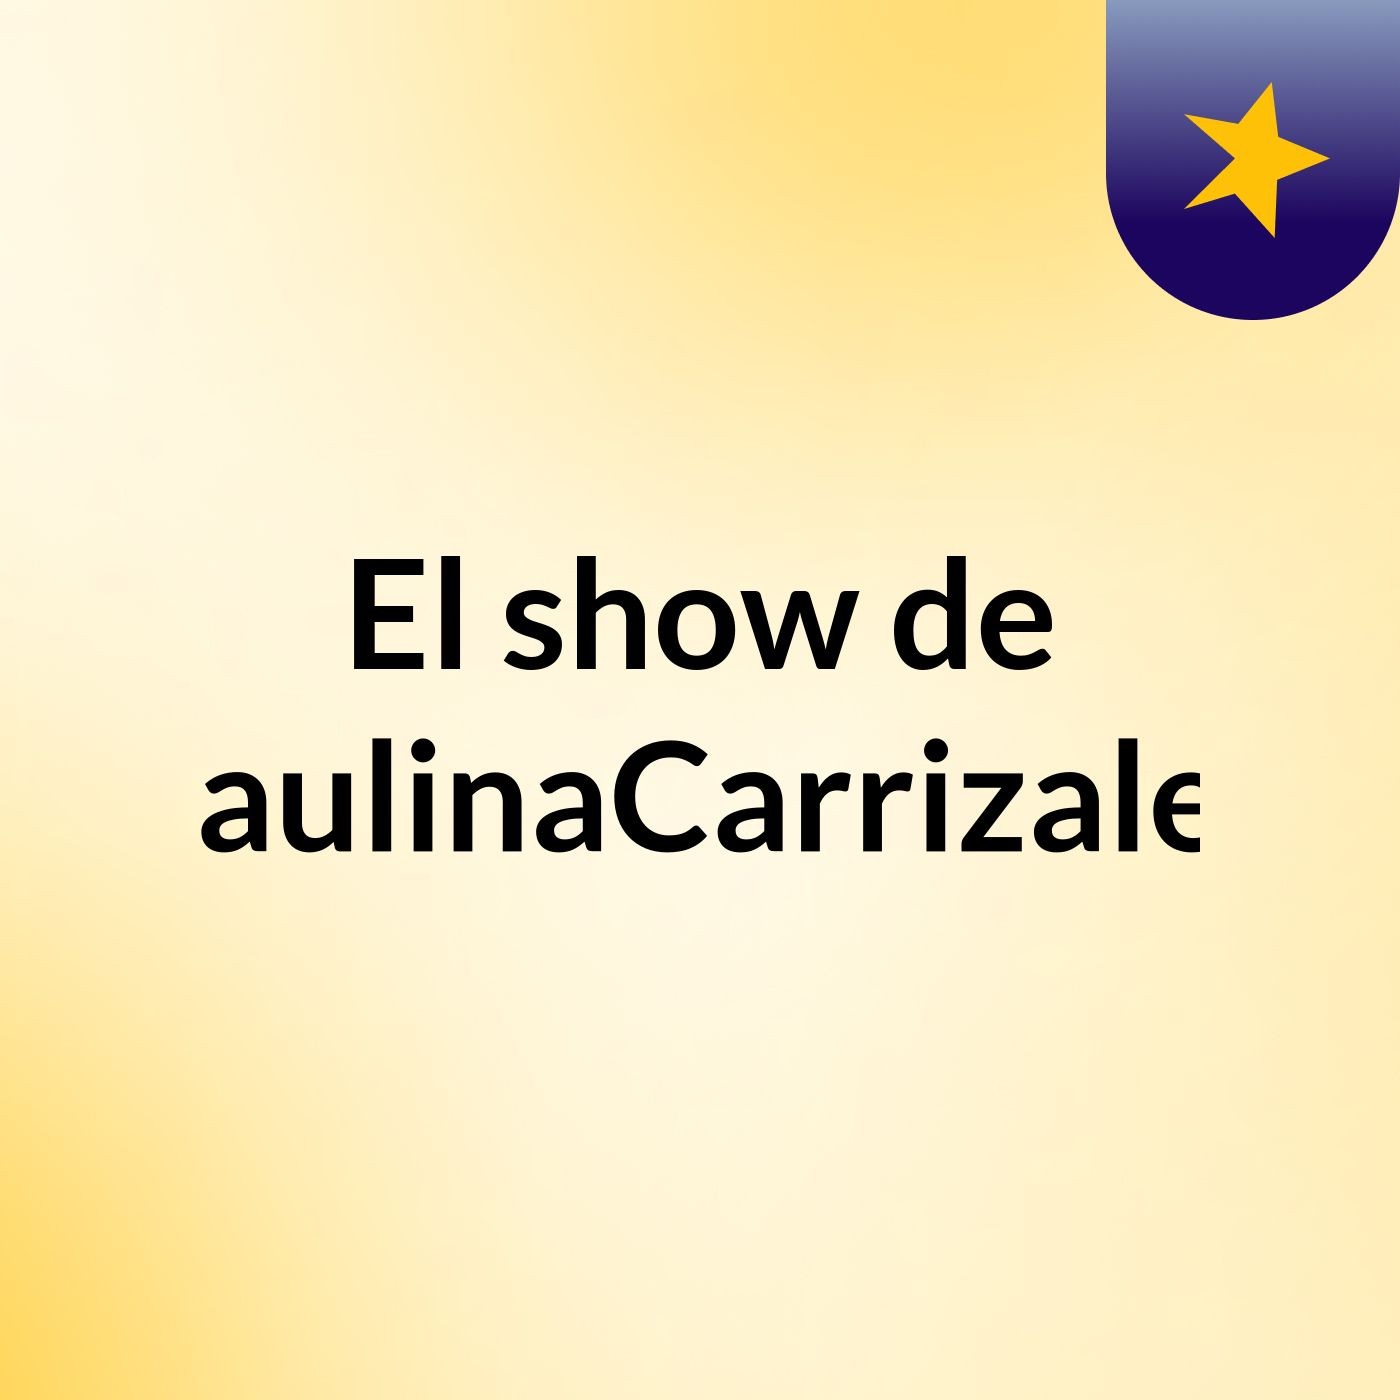 El show de PaulinaCarrizales